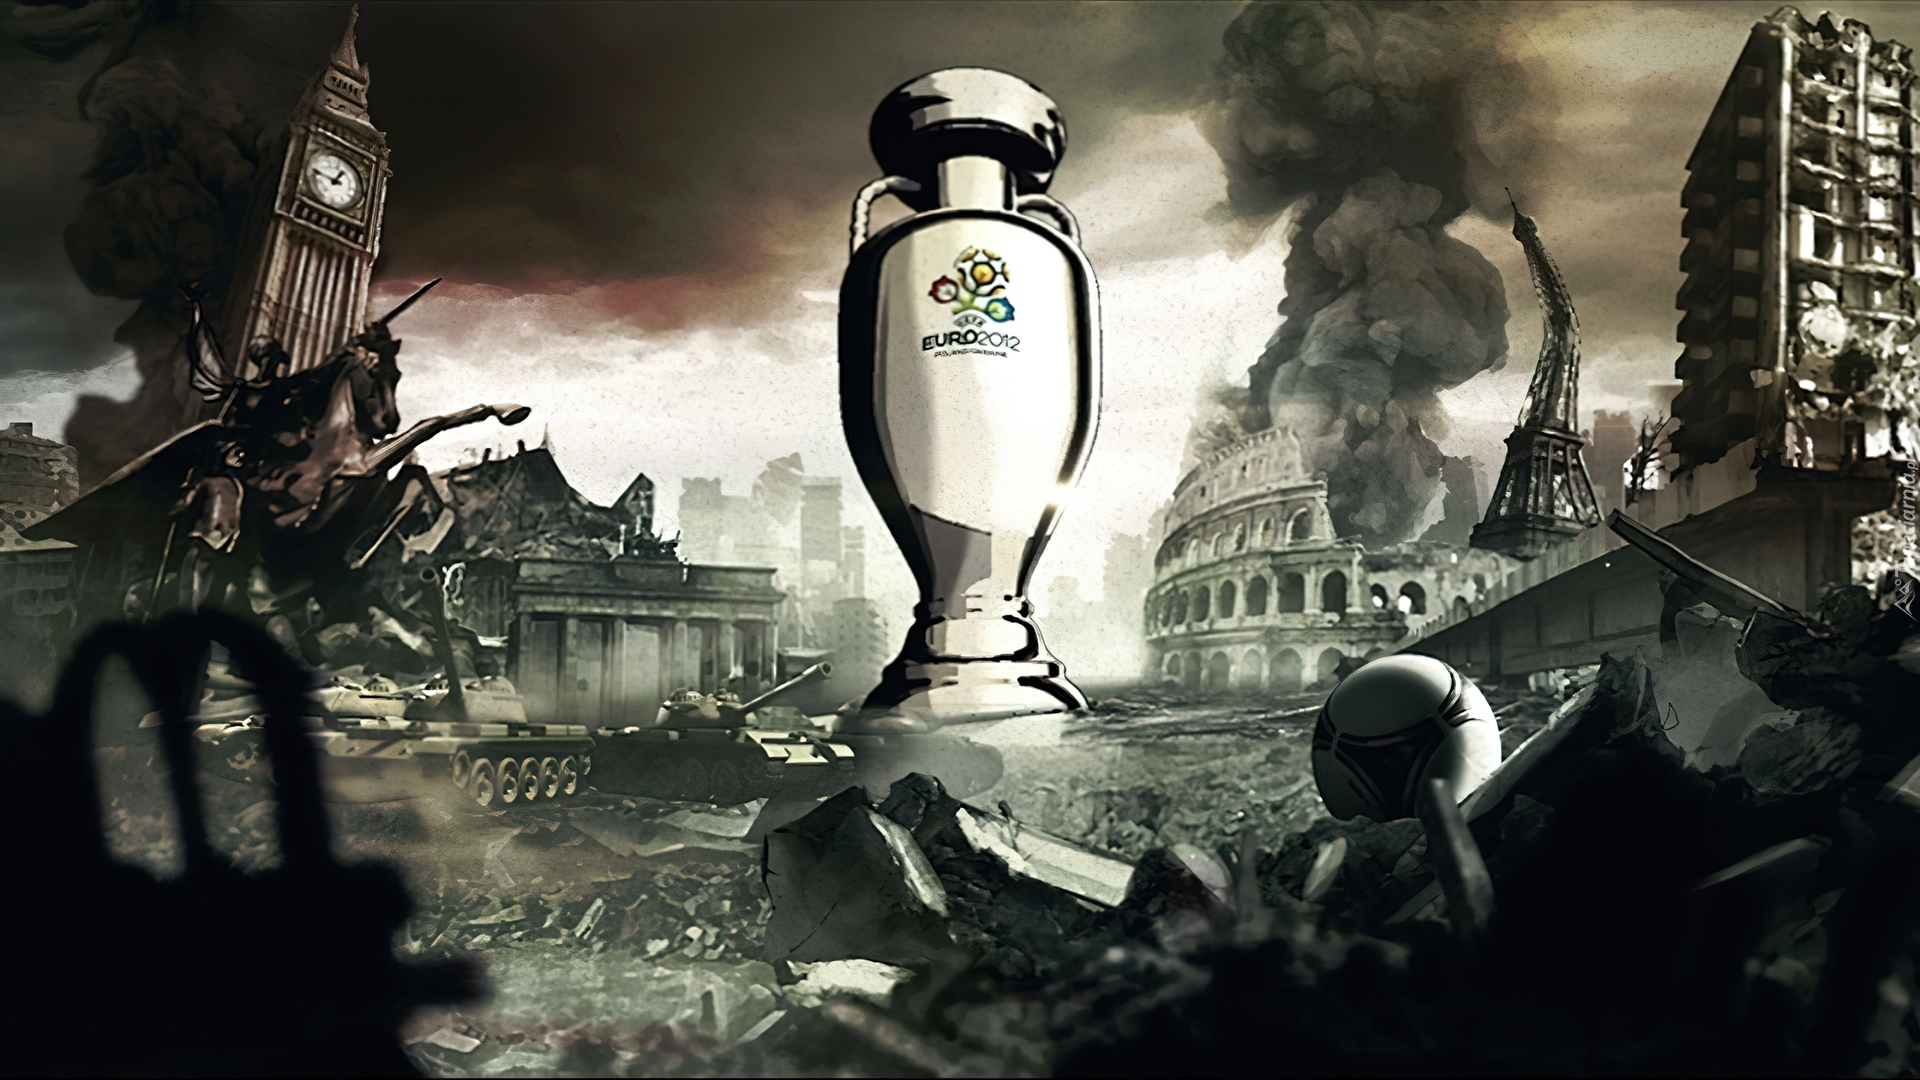 Euro, 2012, Puchar, Kataklizm